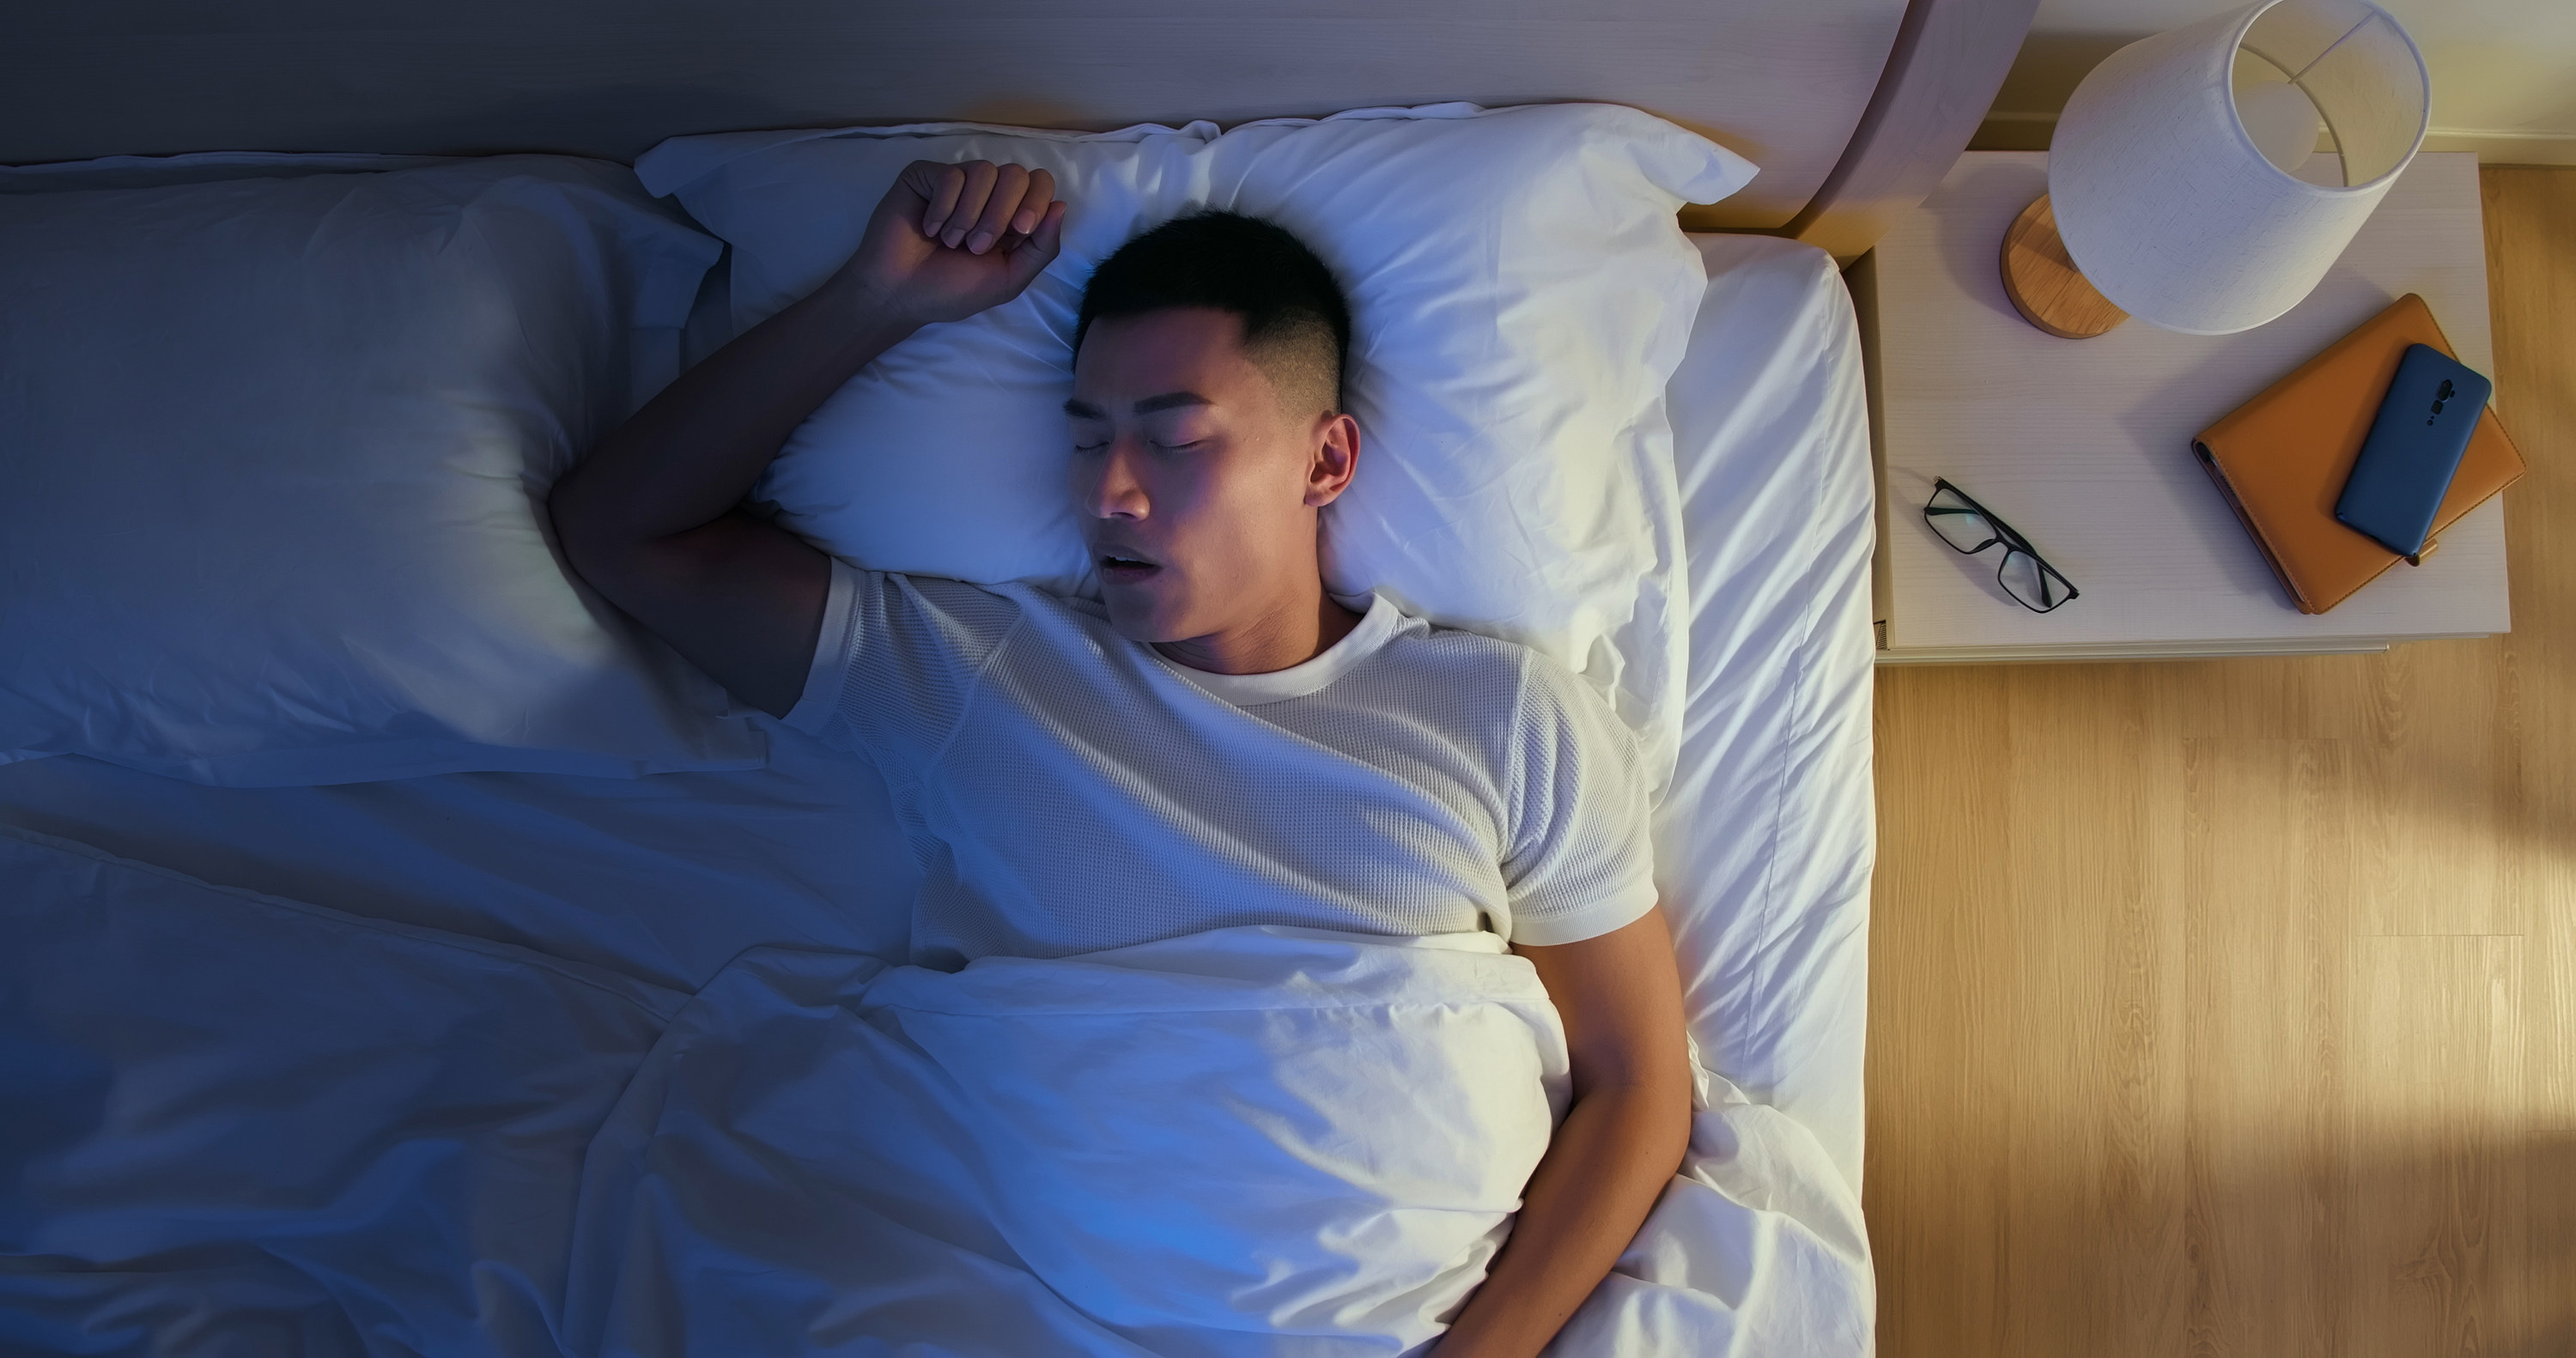 A man sleeps at night